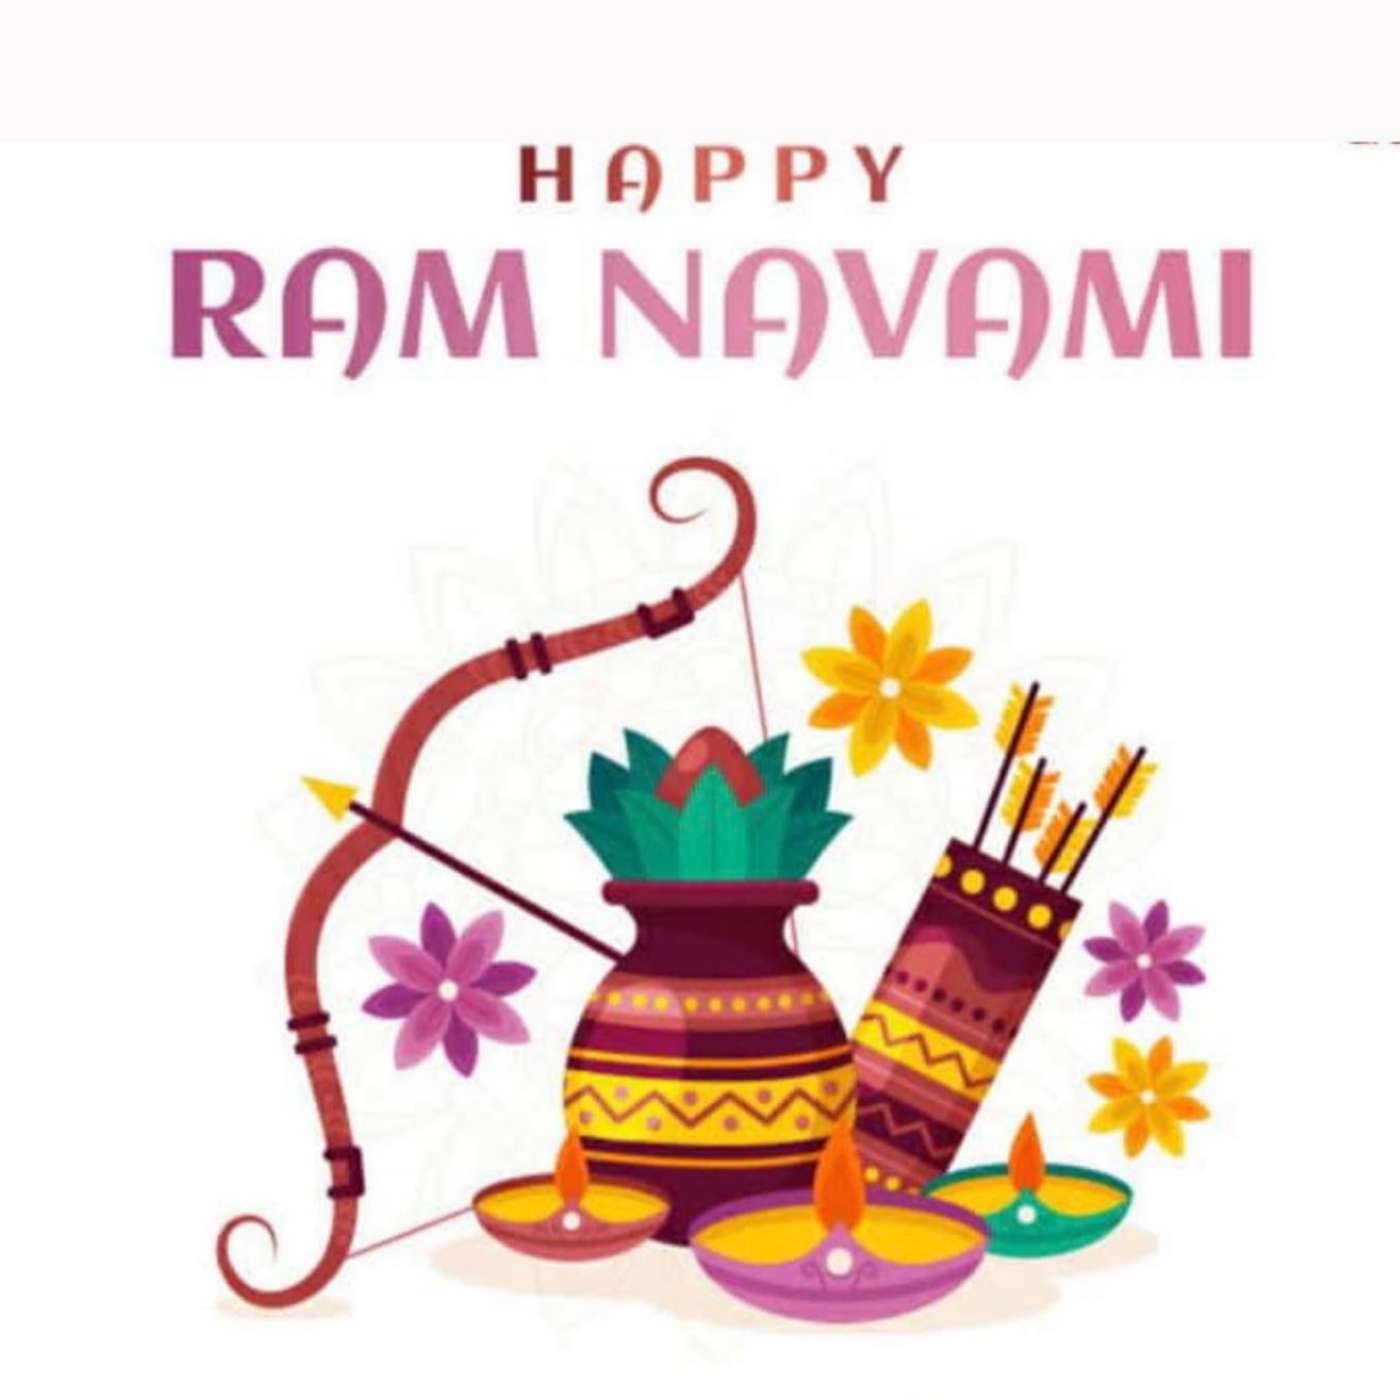 Happy Ram Navami Images For Whatsapp Dp